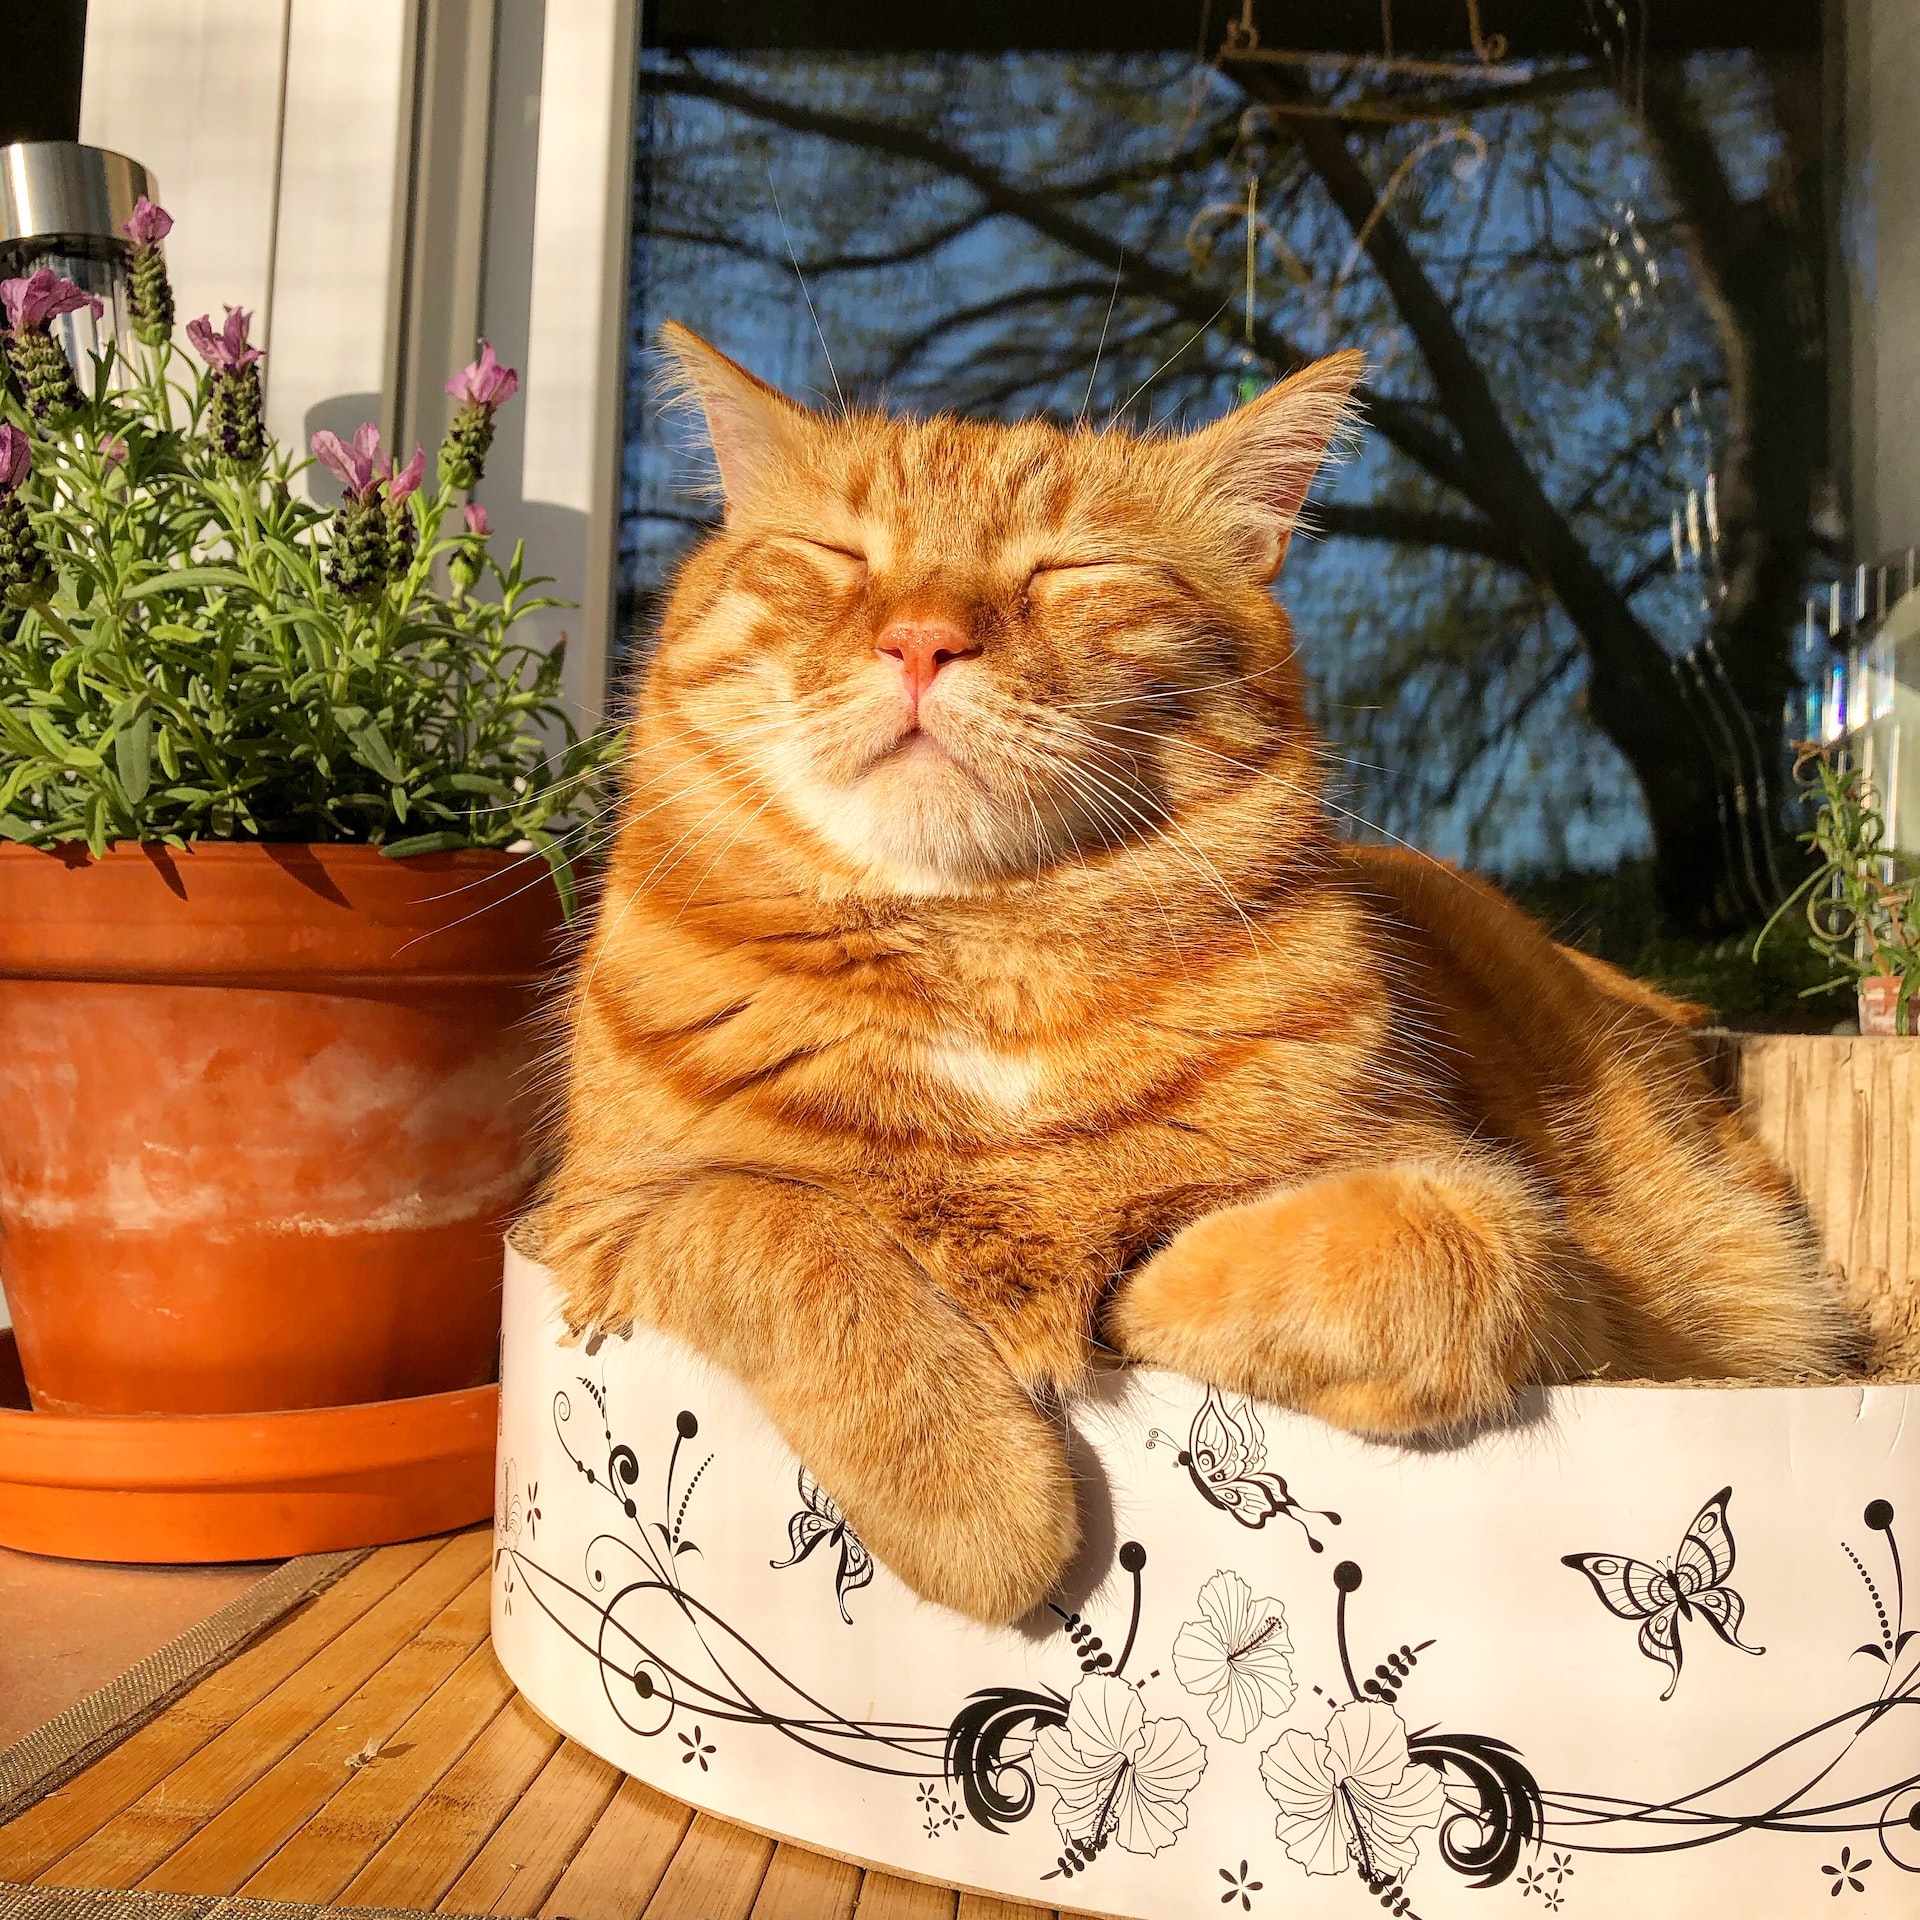 Cat basking in sun